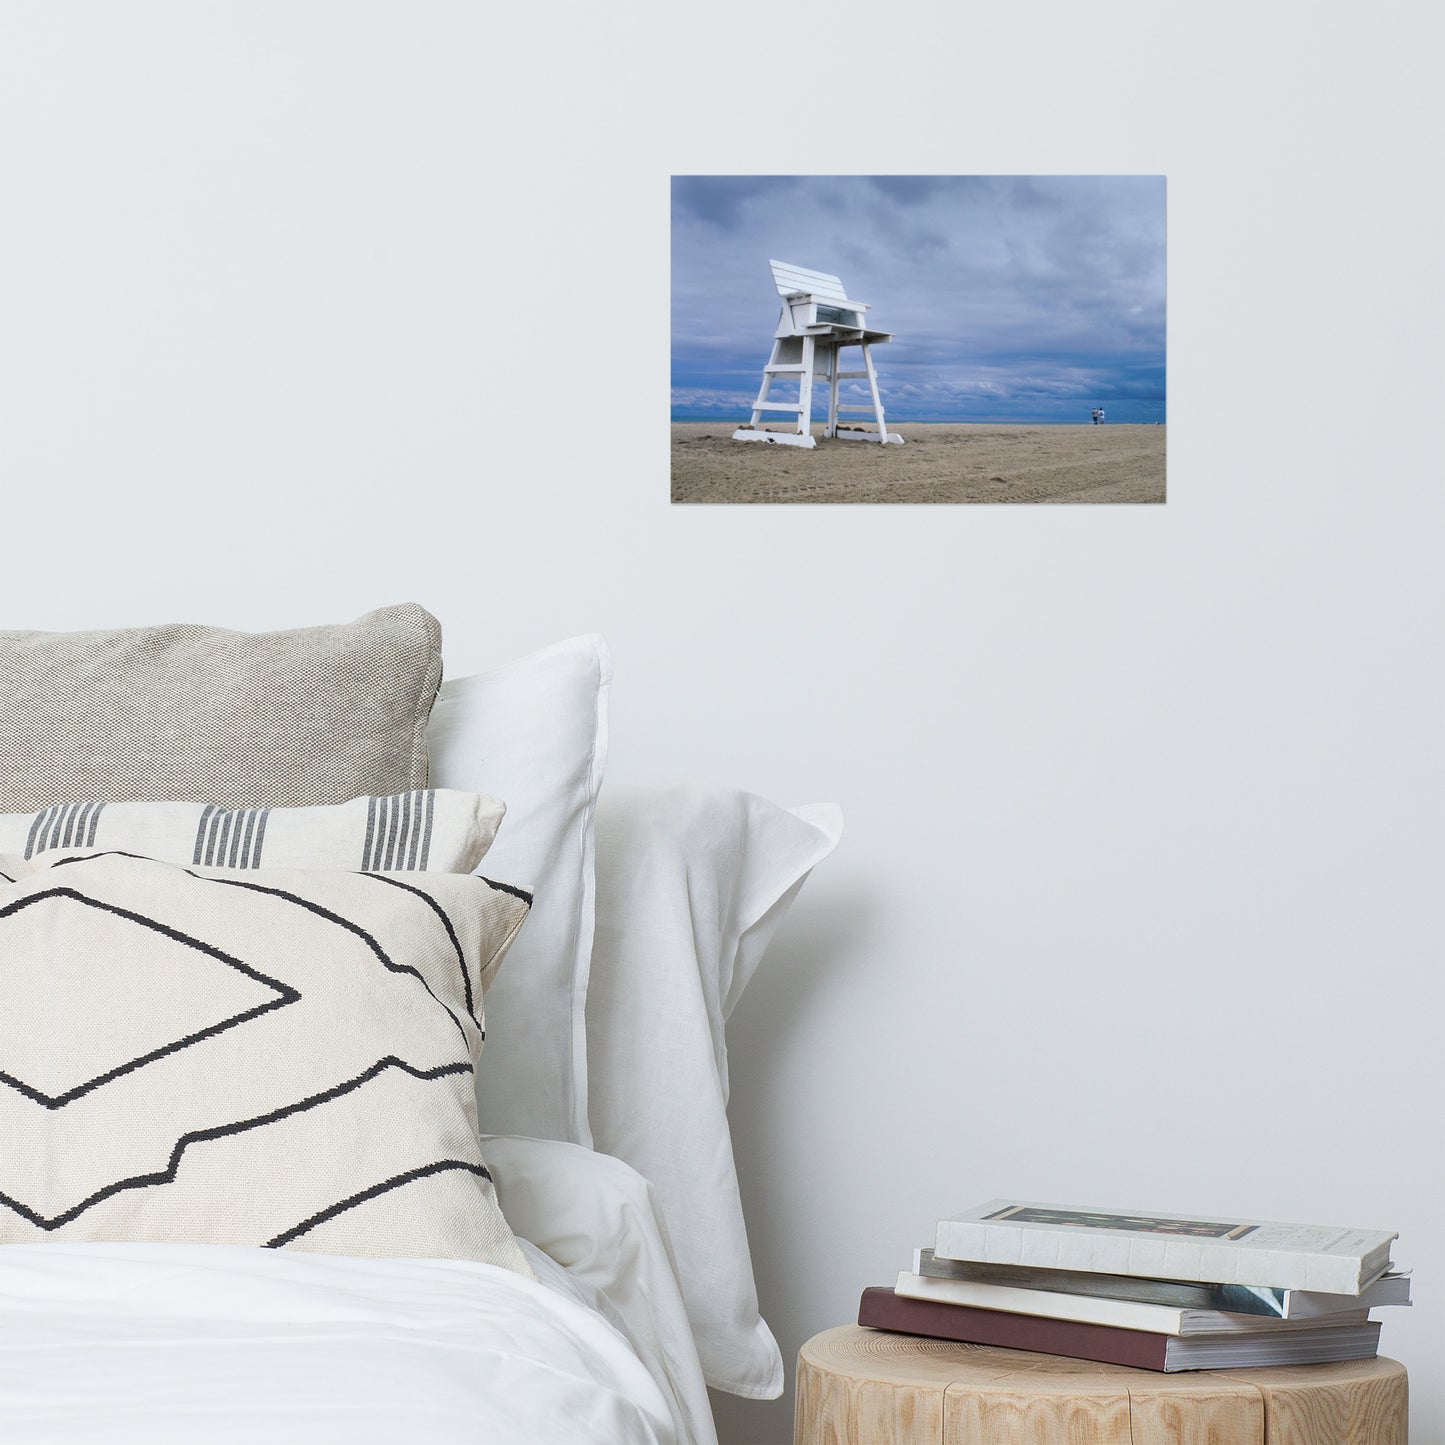 Bed Wall Decor: Stormy Skies - Beach / Coastal / Seascape Nature / Landscape Photograph Loose / Unframed Wall Art Print - Artwork